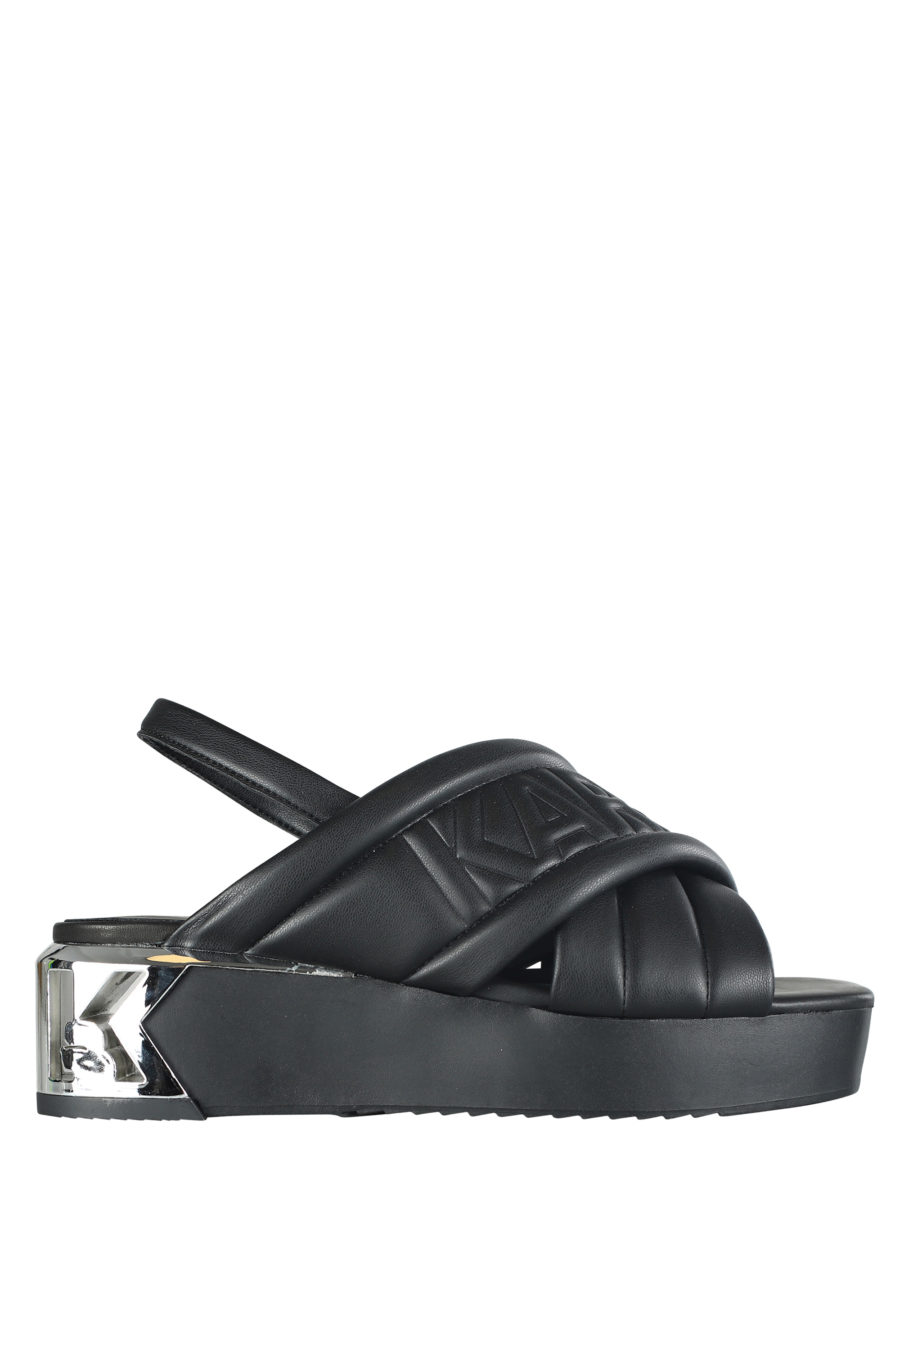 Sandalias negras acolchonadas con logo negro y plataforma - IMG 5329